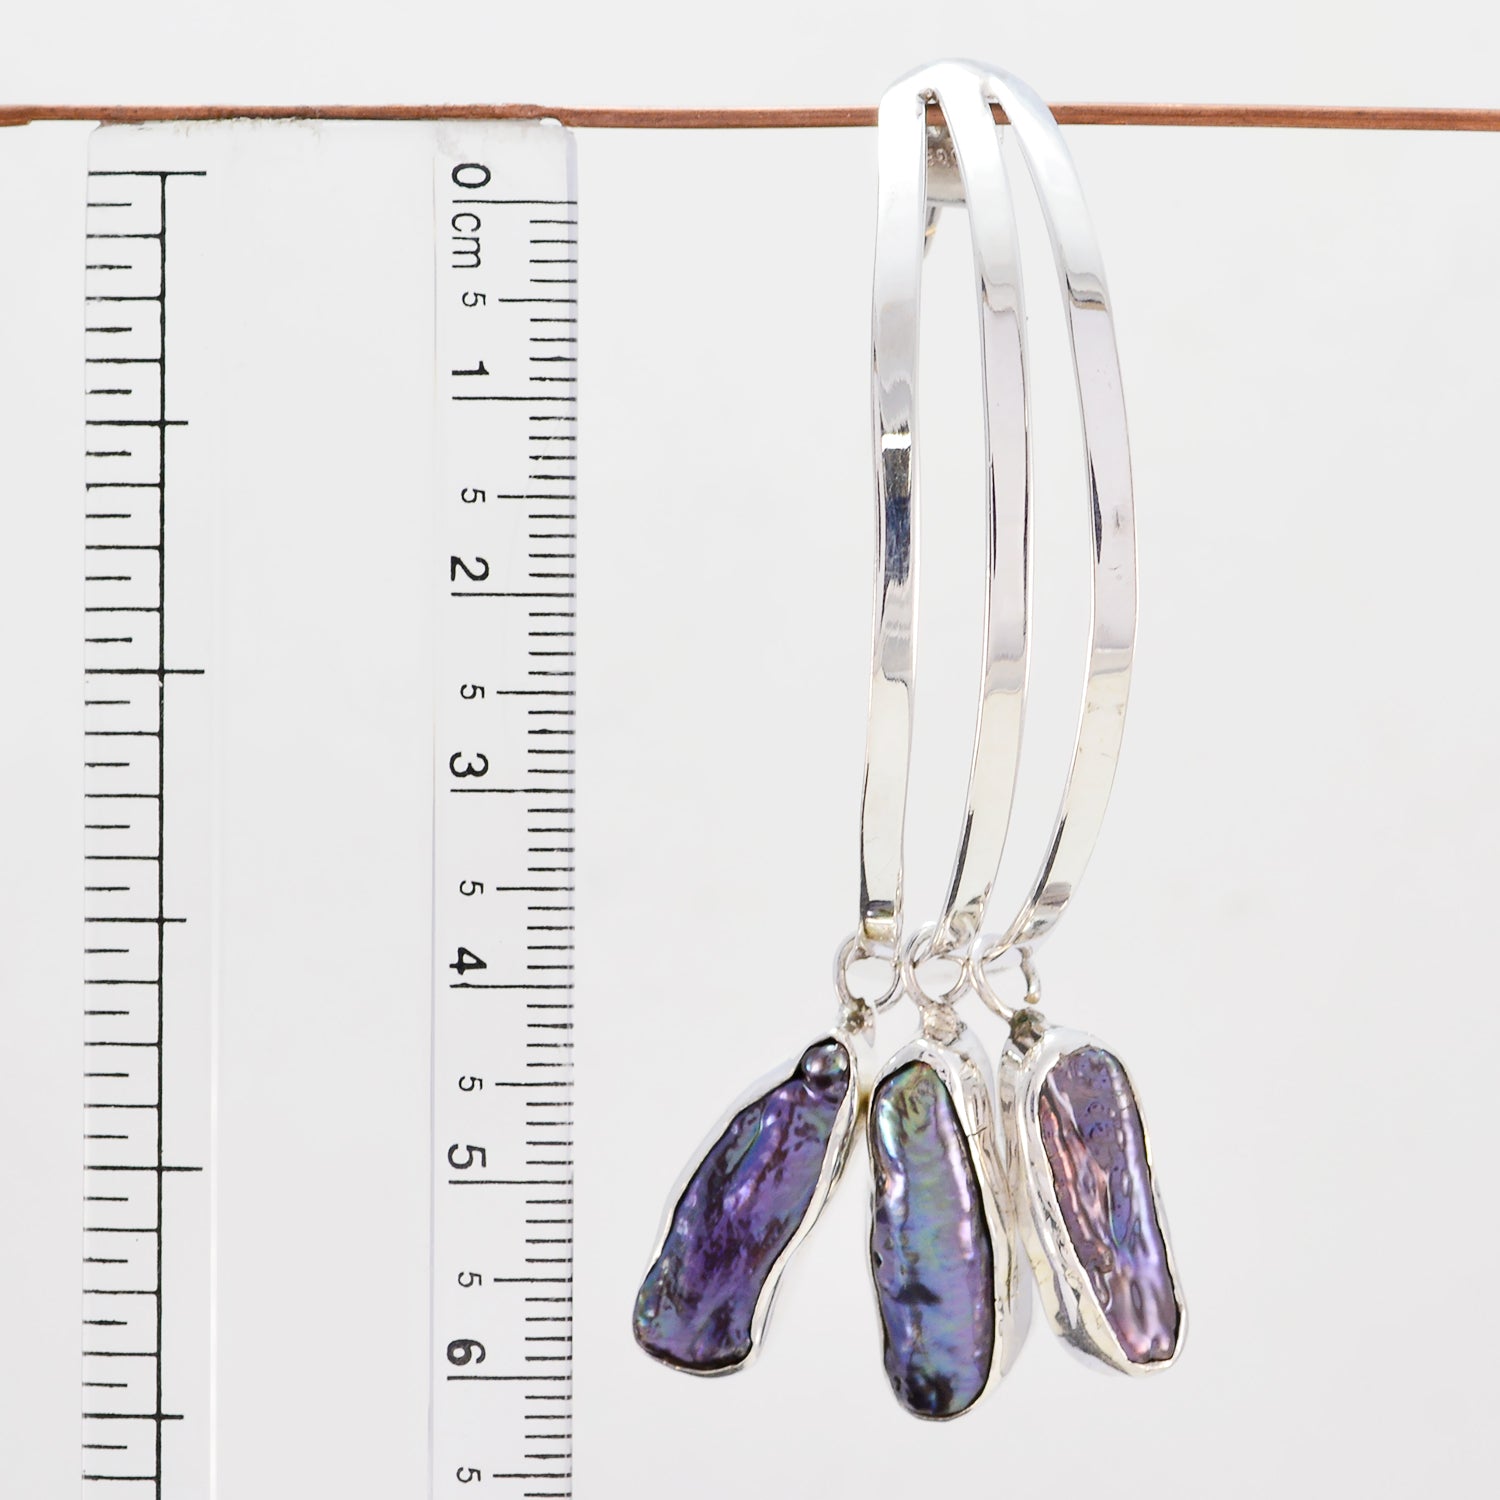 Riyo Good Gemstones multi shape Cabochon Black Peral Silver Earrings gift for black Friday